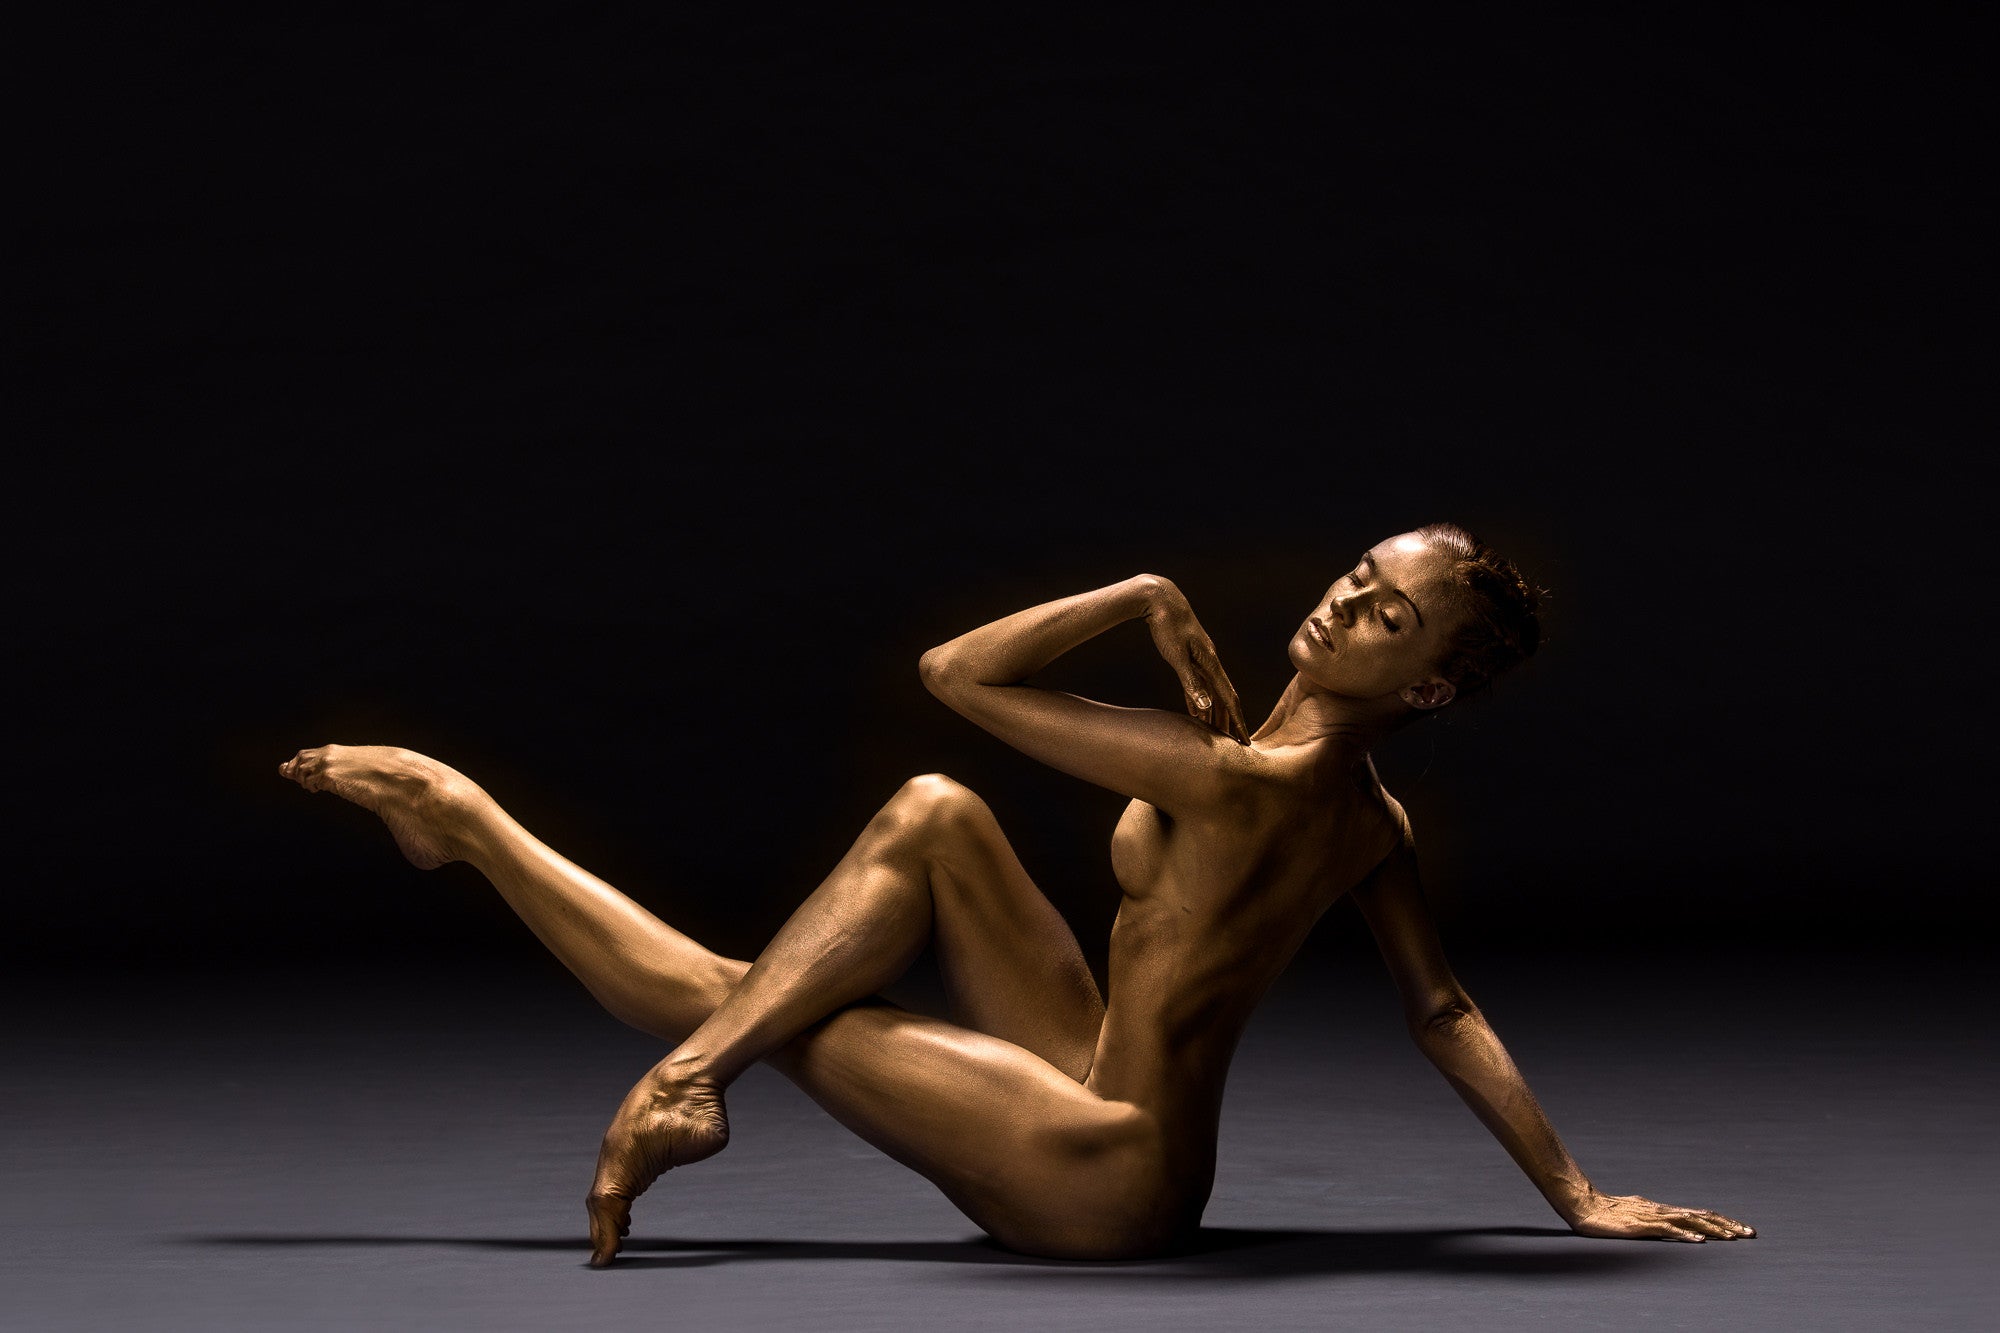 Dancer by Francisco Estevez